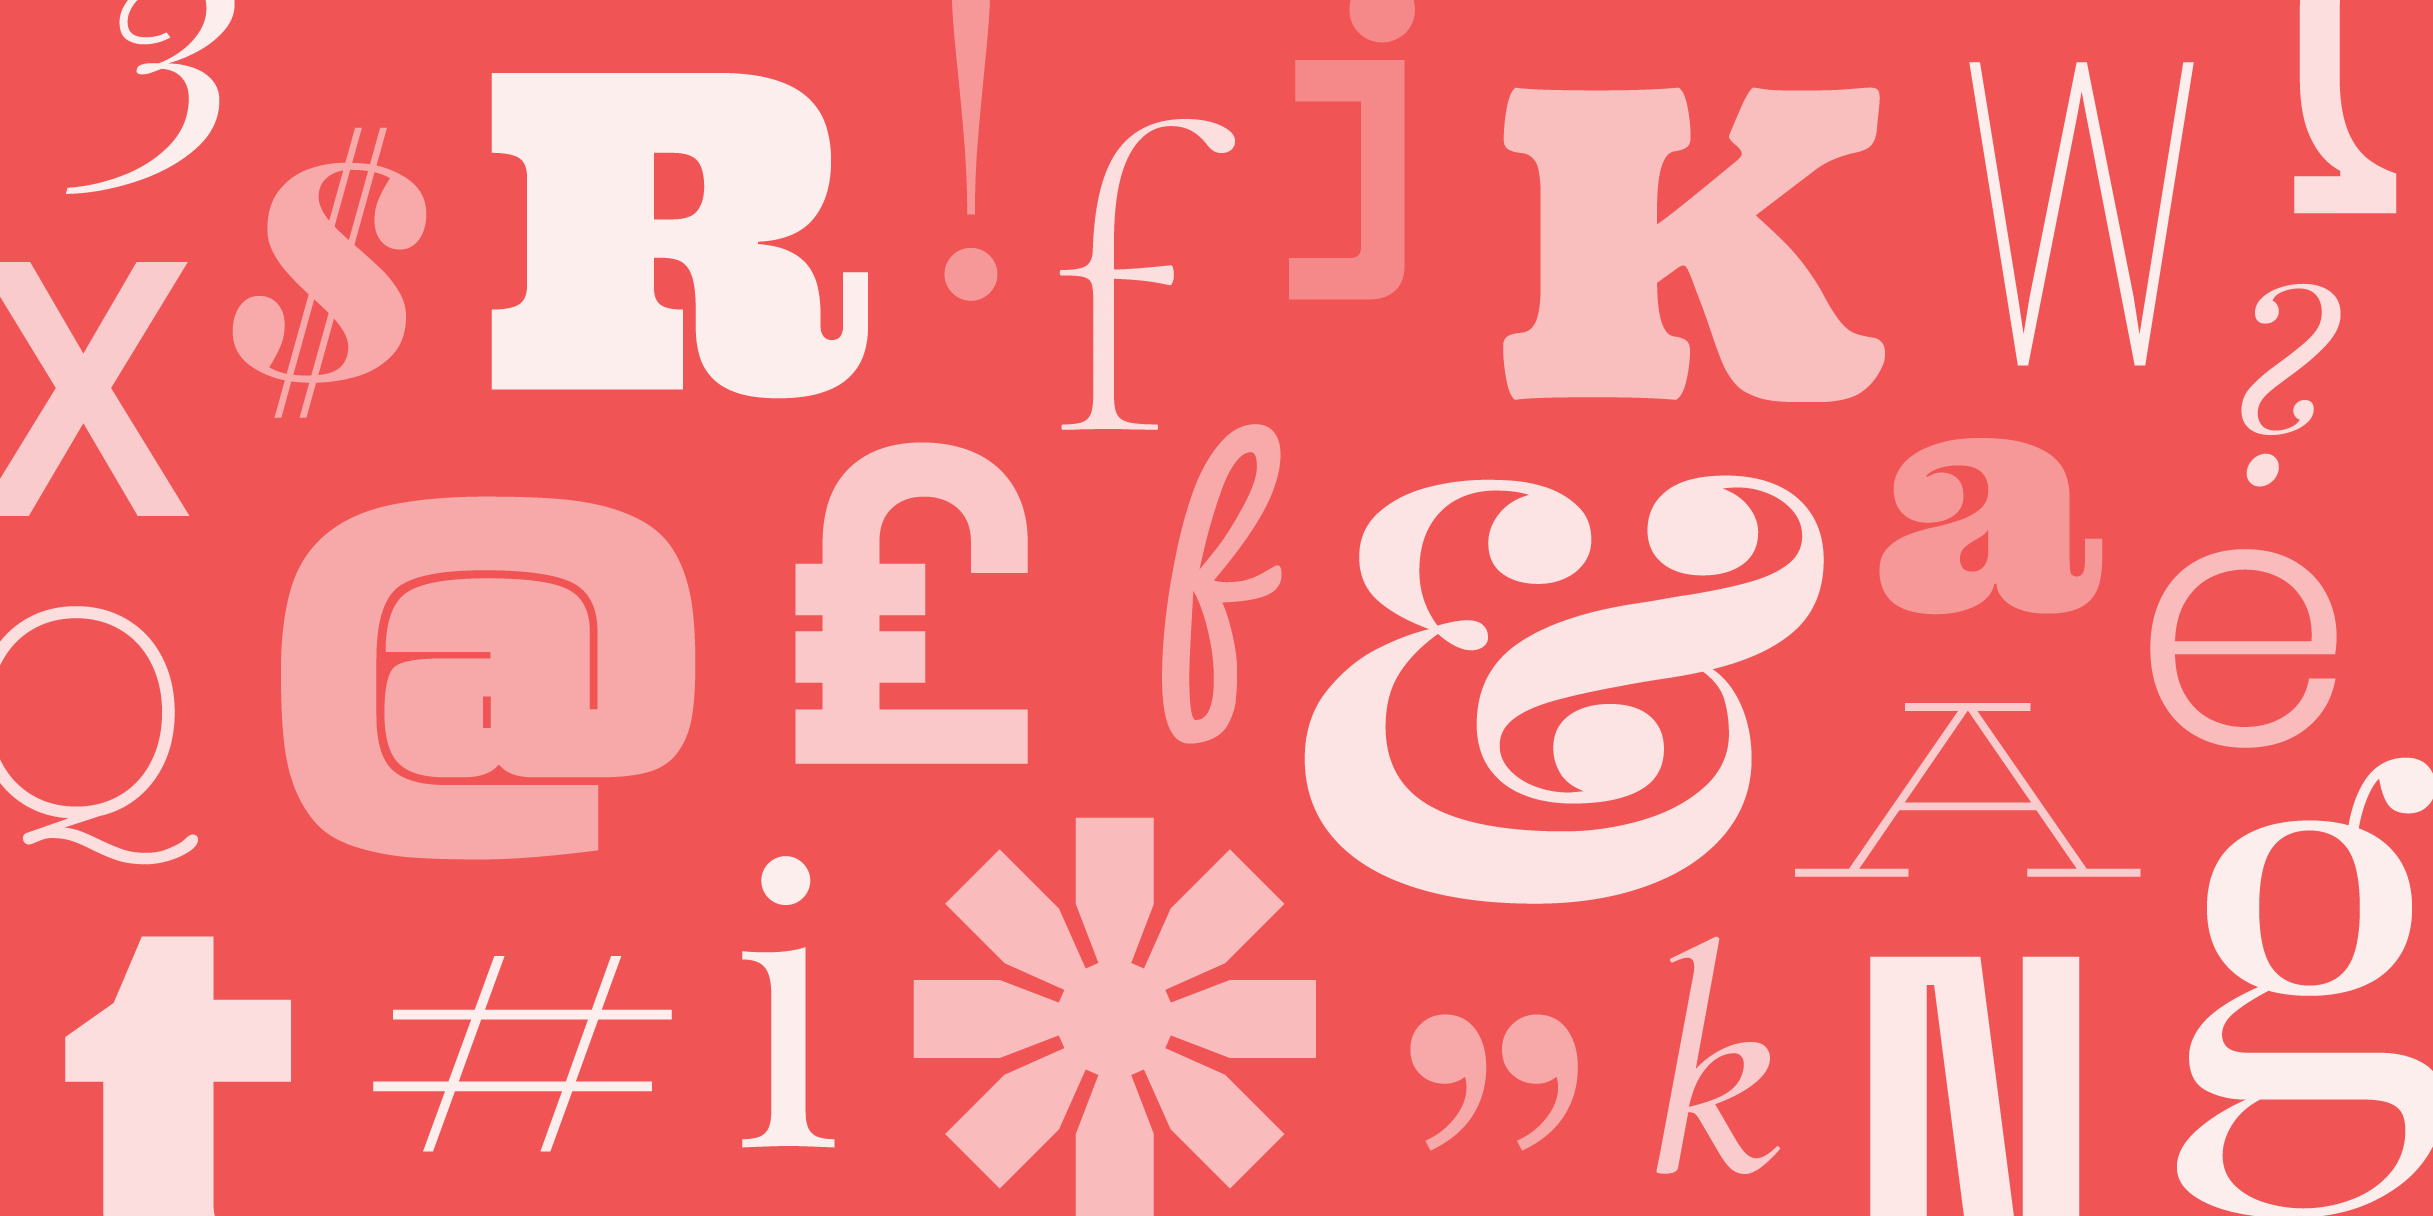 Free Fonts vs Premium Fonts